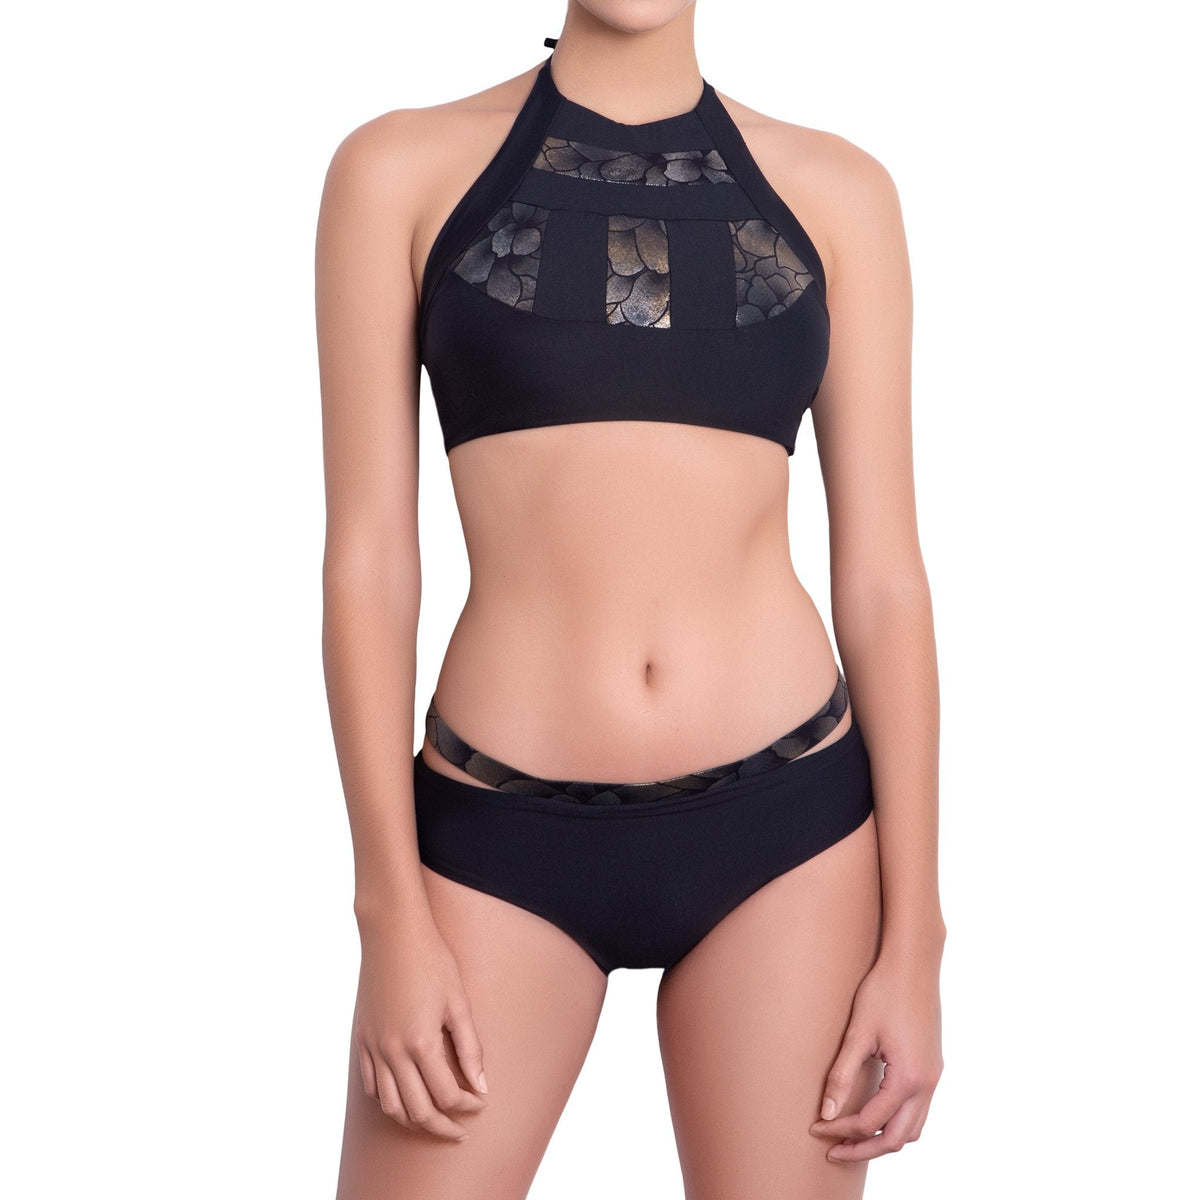 ISABELLE medium rise panty, bronze brocade cutout waistband black bikini bottom by ALMA swimwear ‚Äì front view 1